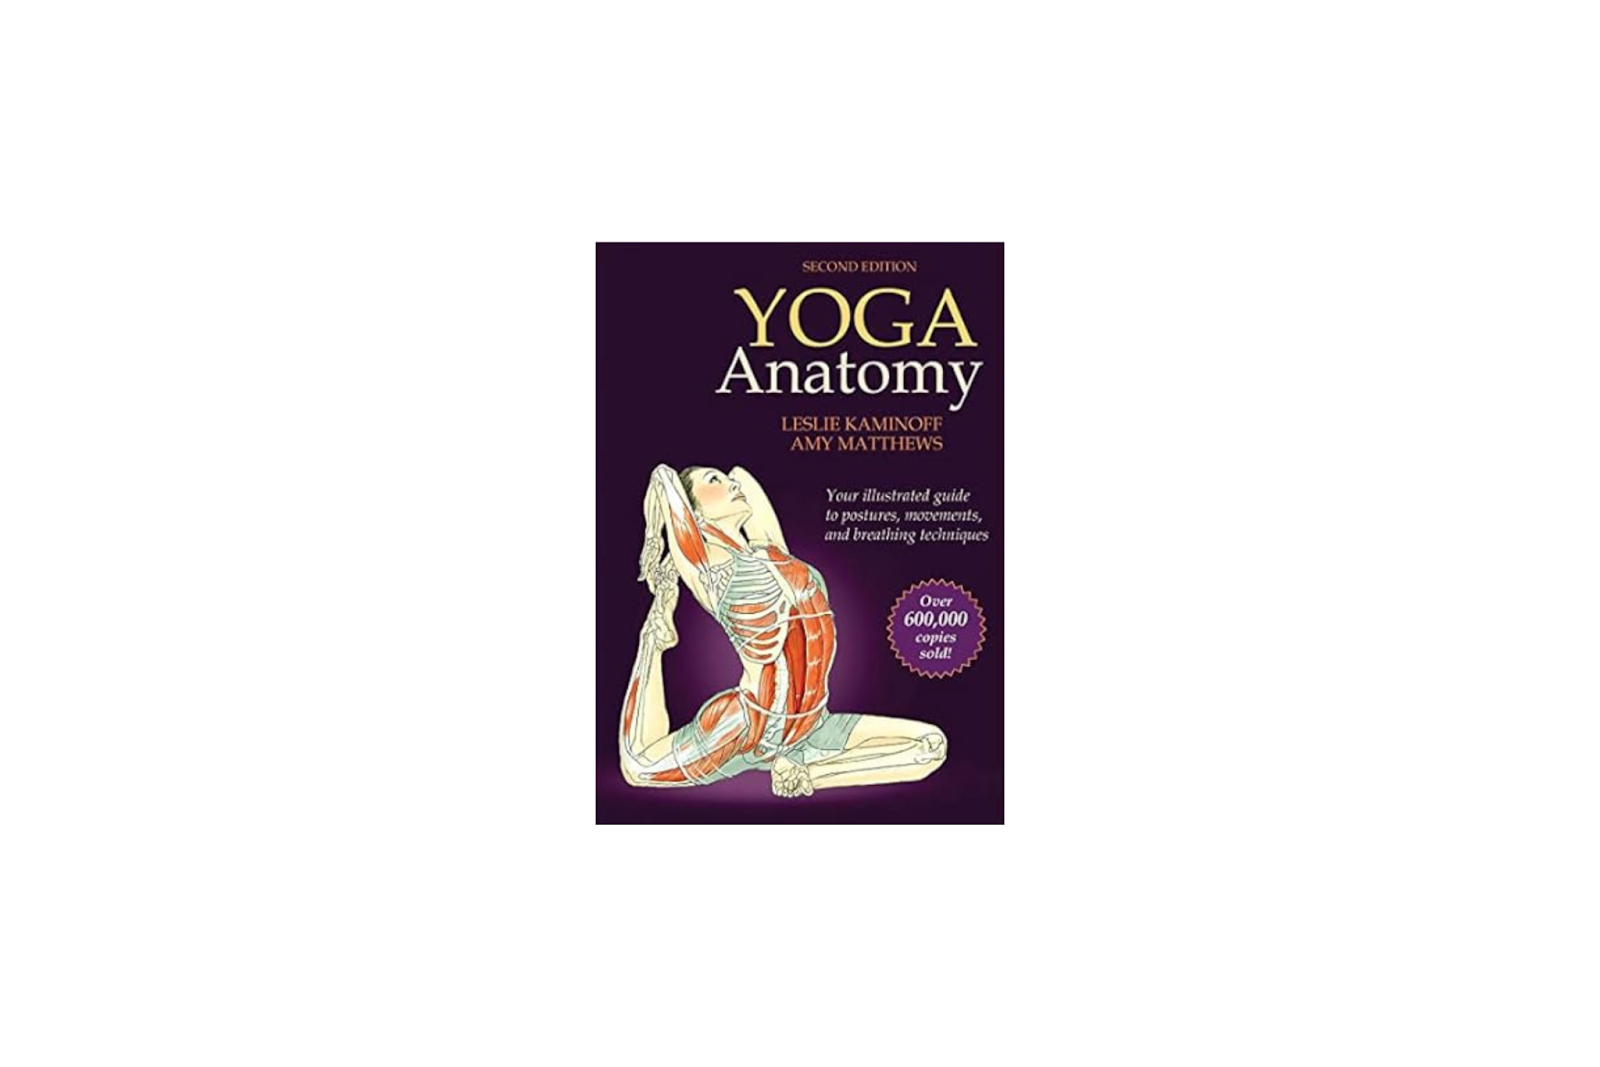 Yoga Anatomy by Leslie Kaminoff and Amy Matthews